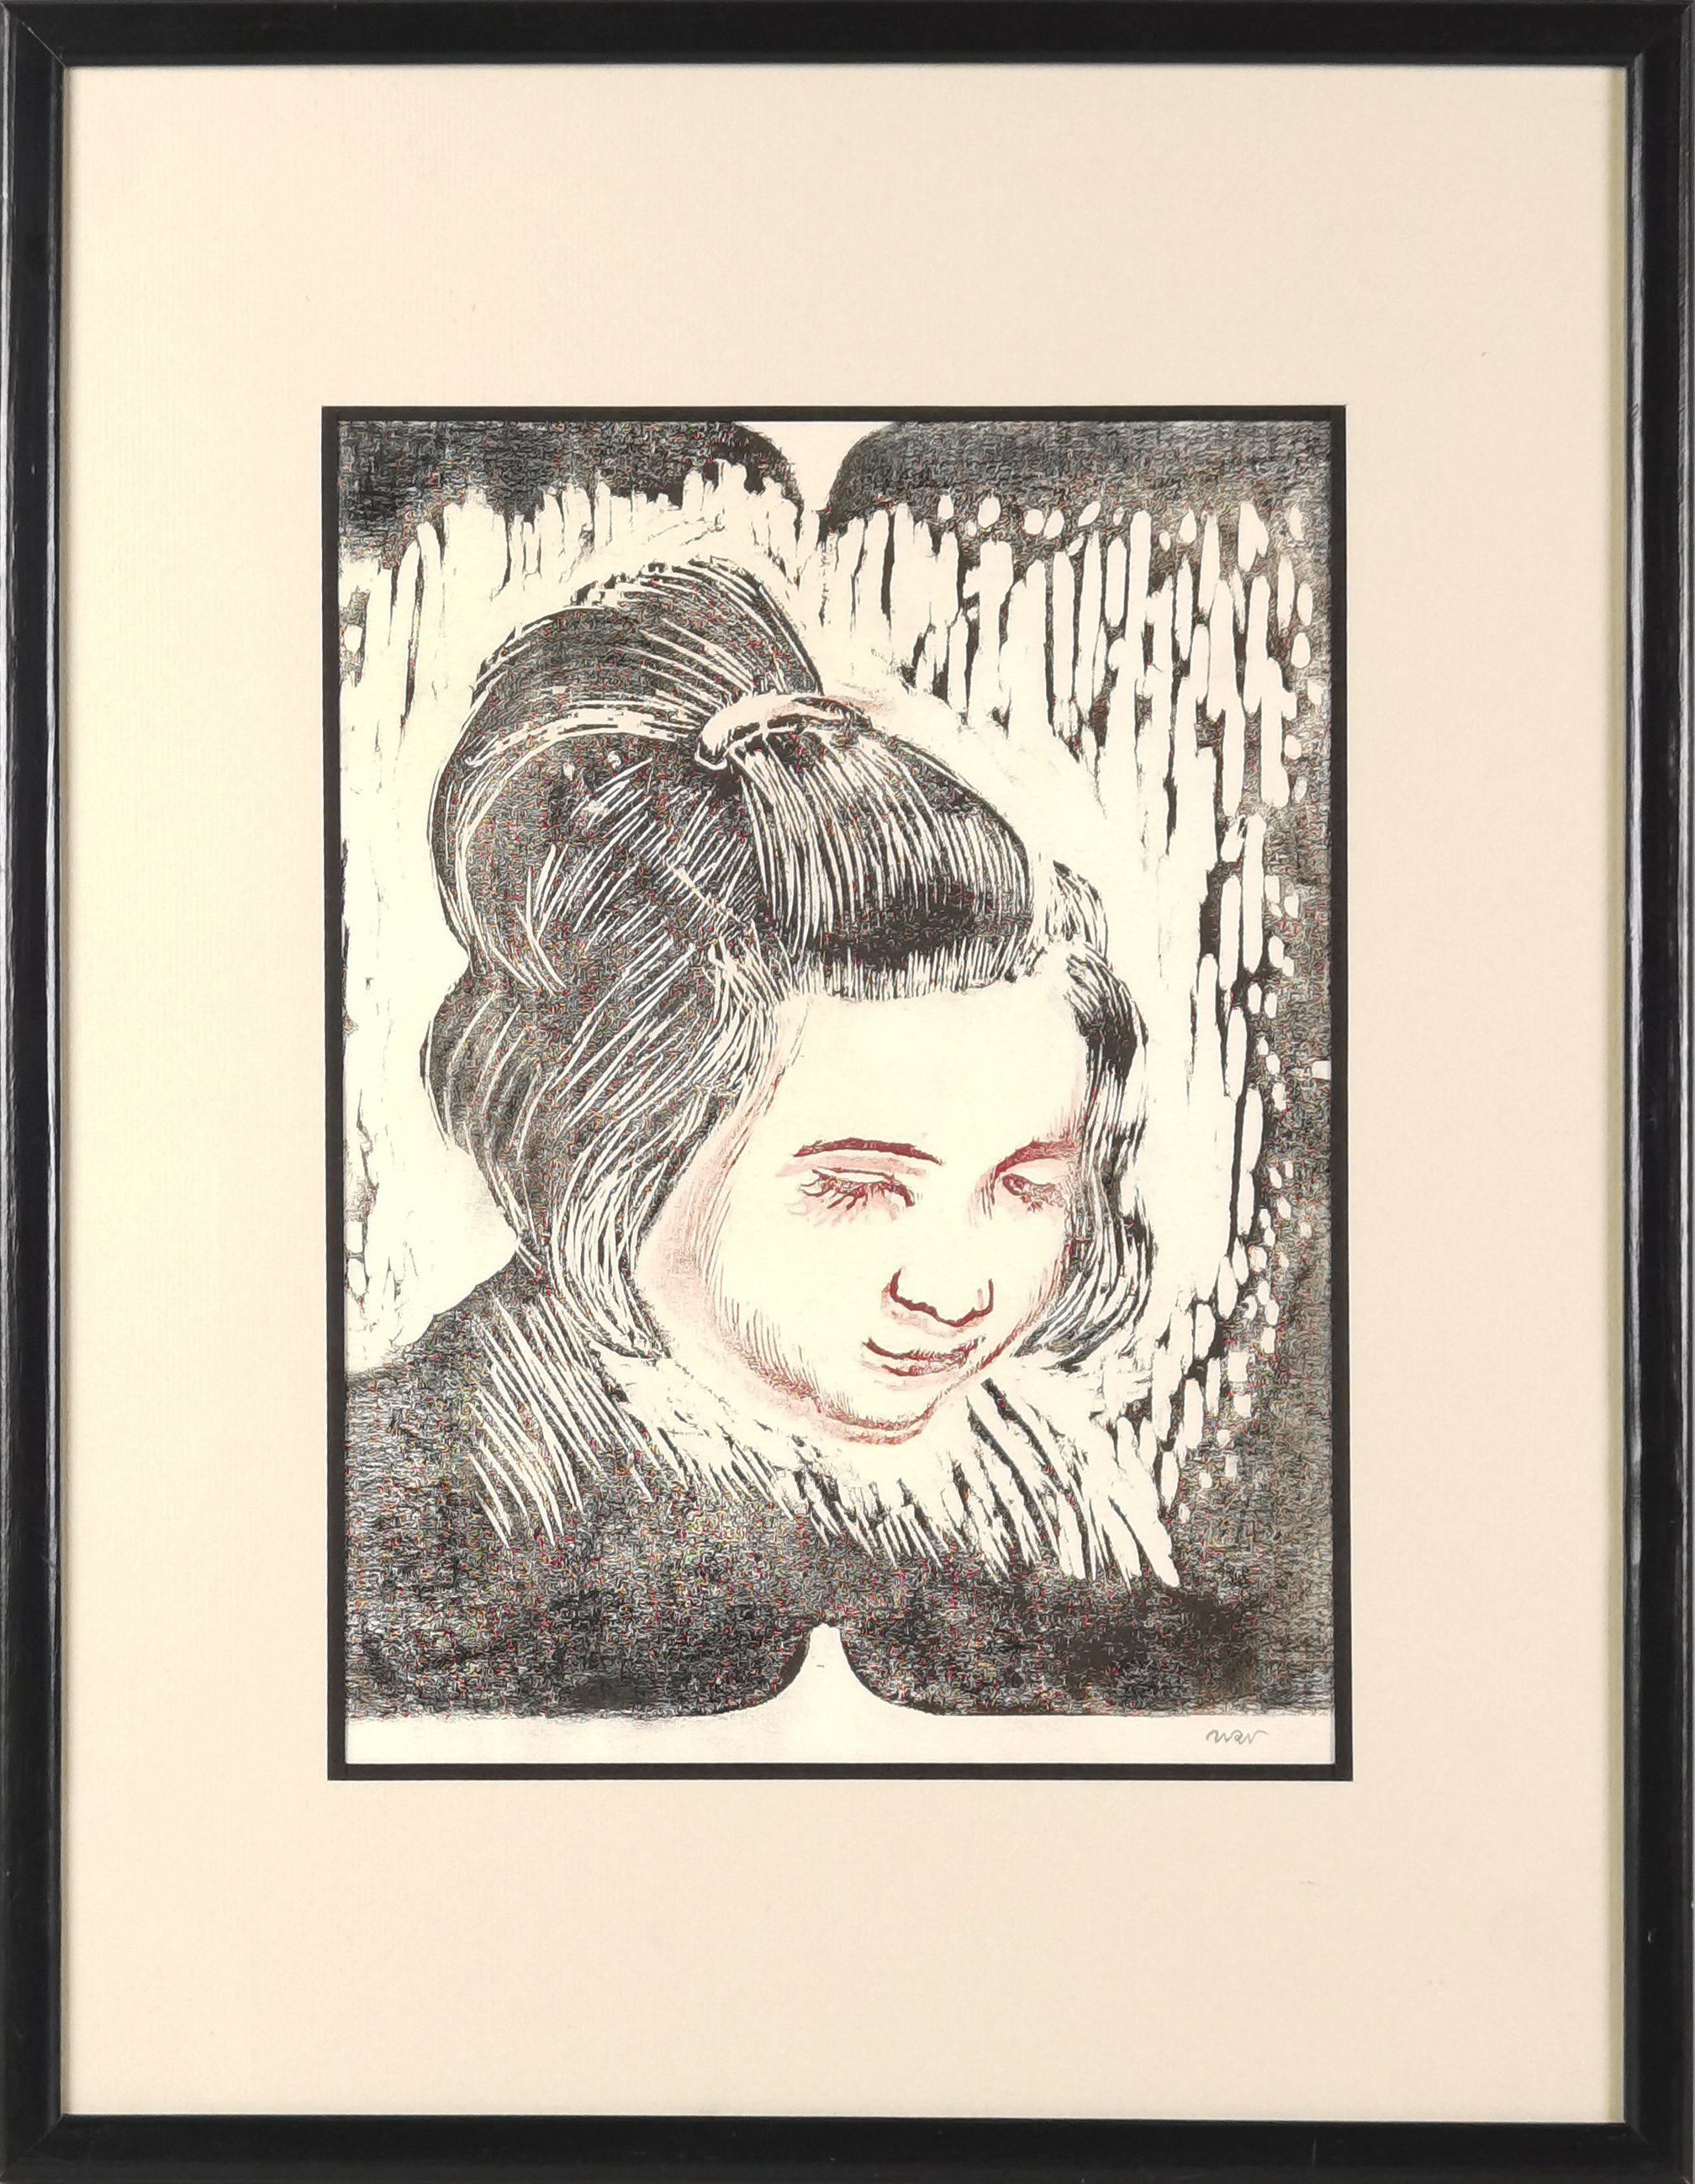 Hanusia - córka artysty, 1925